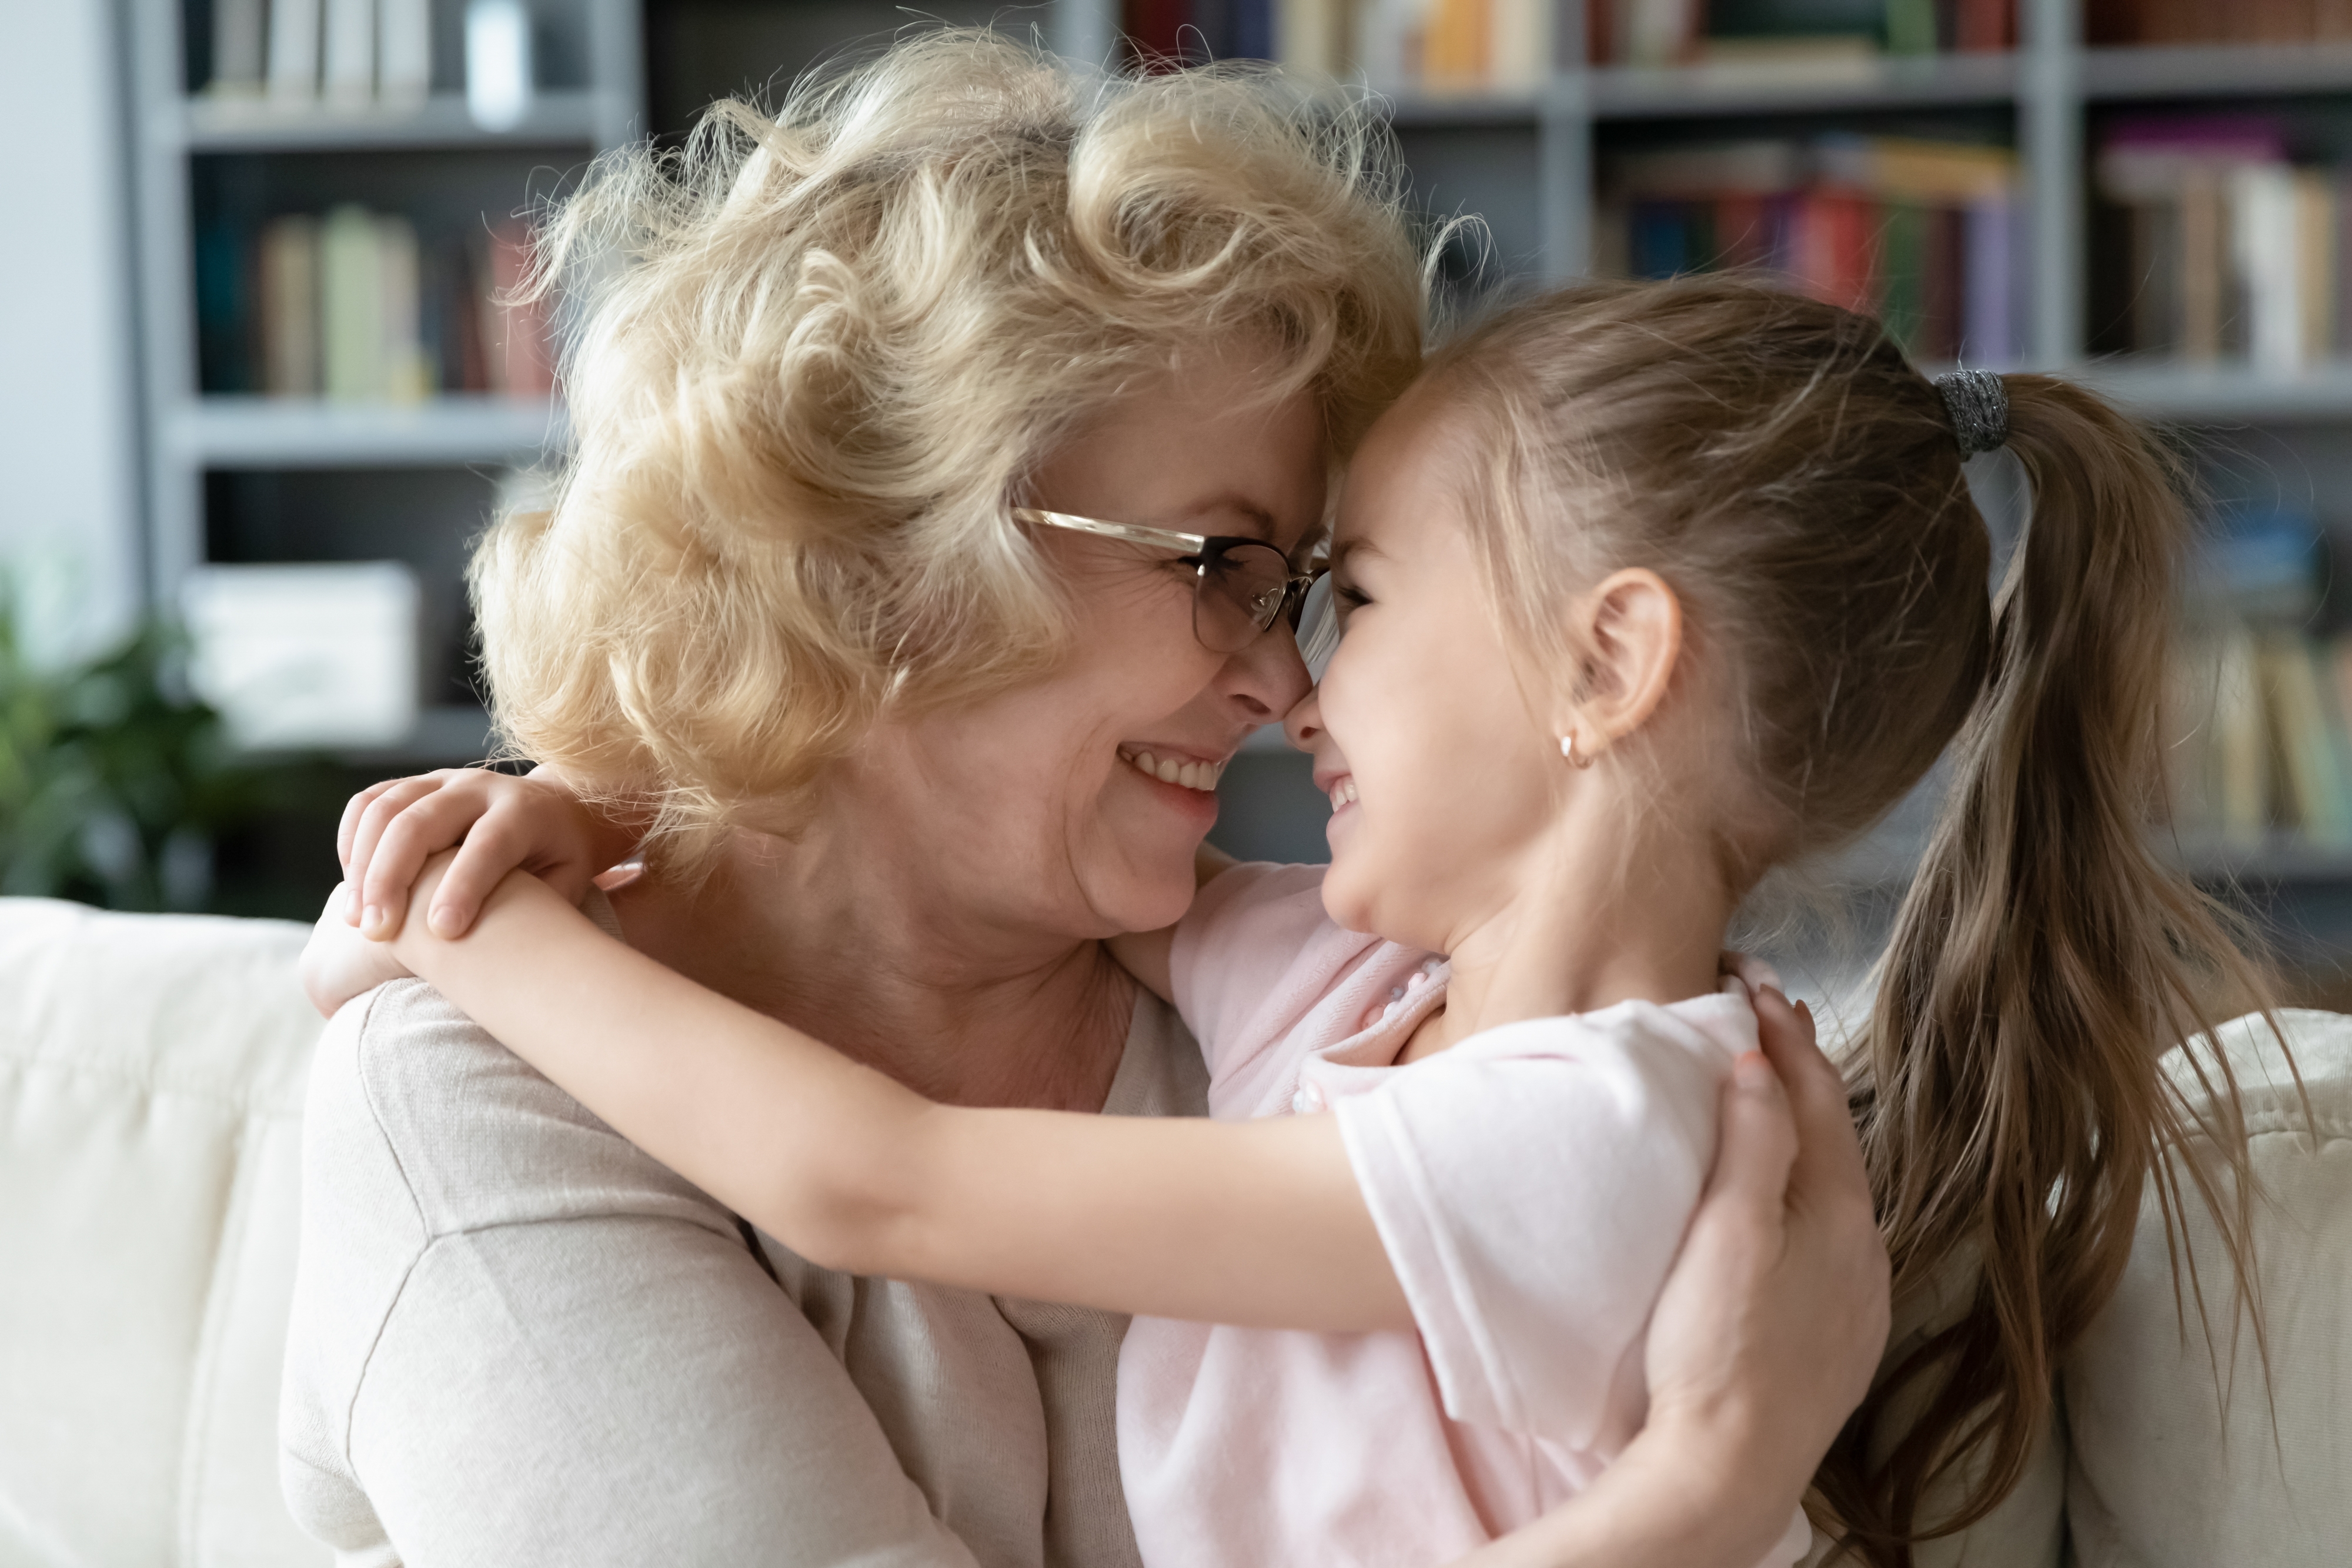 Grandmother hugging her little granddaughter | Source: Shutterstock